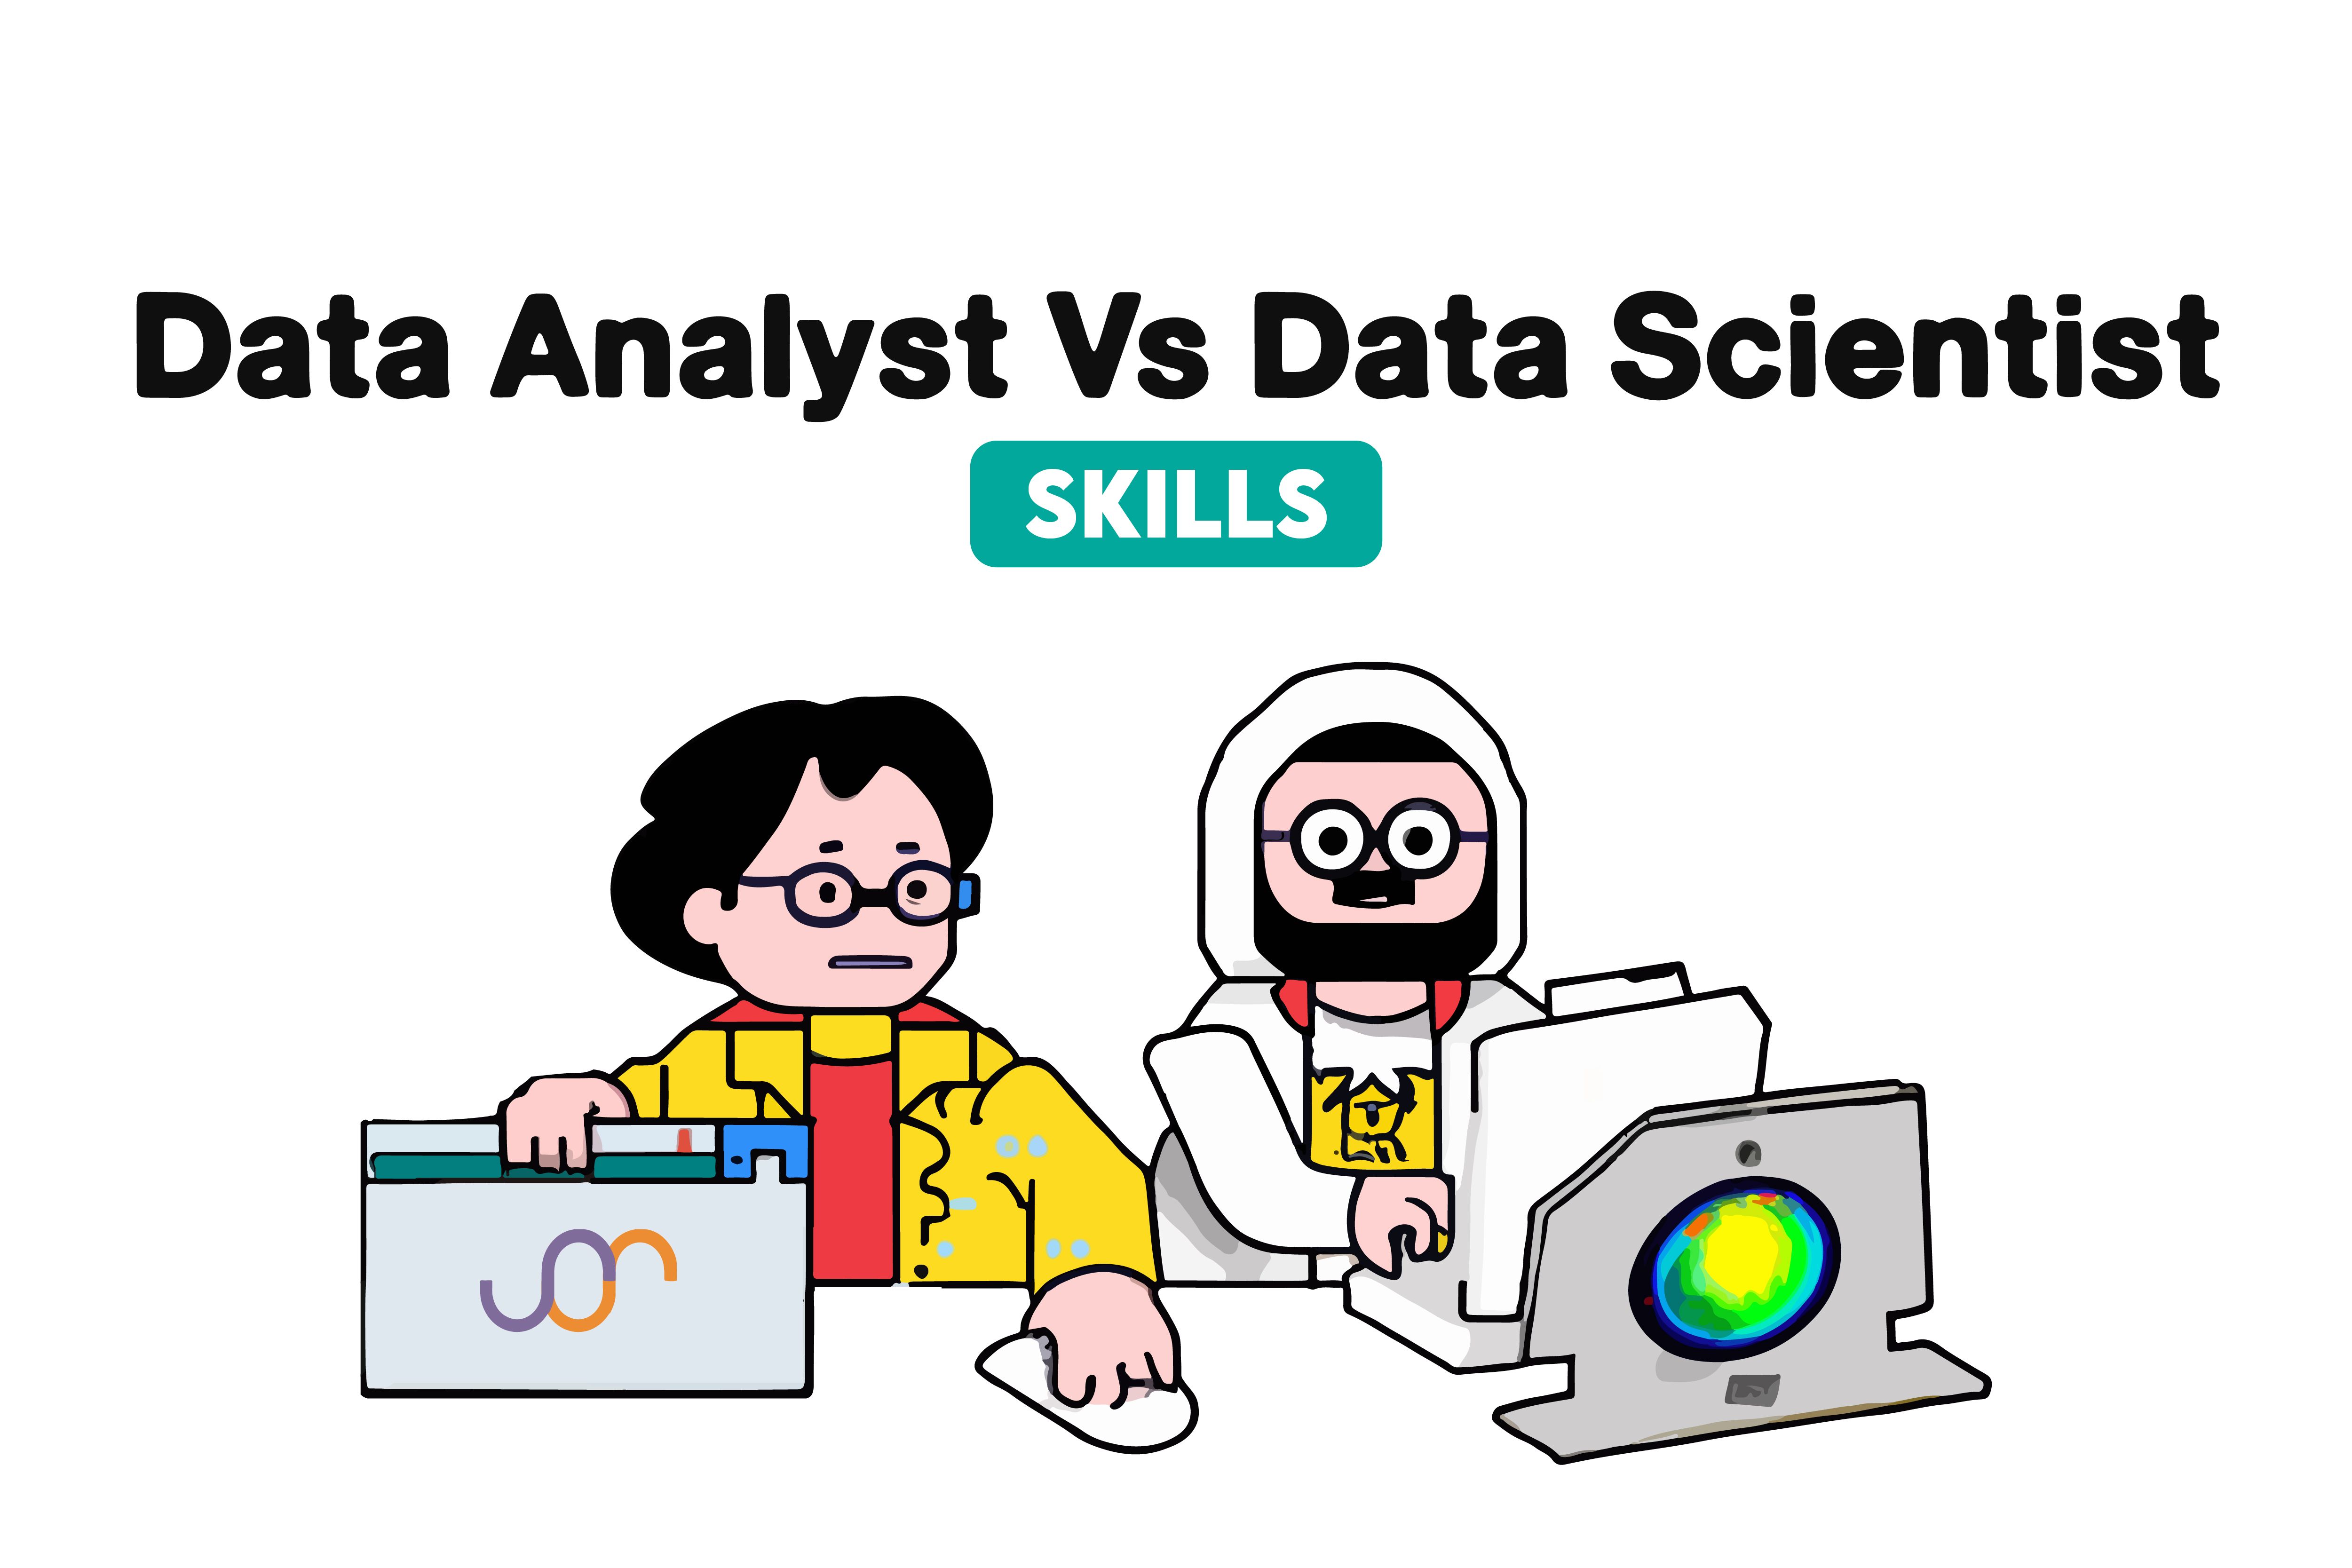 Data Analyst Vs Data Scientist Skills